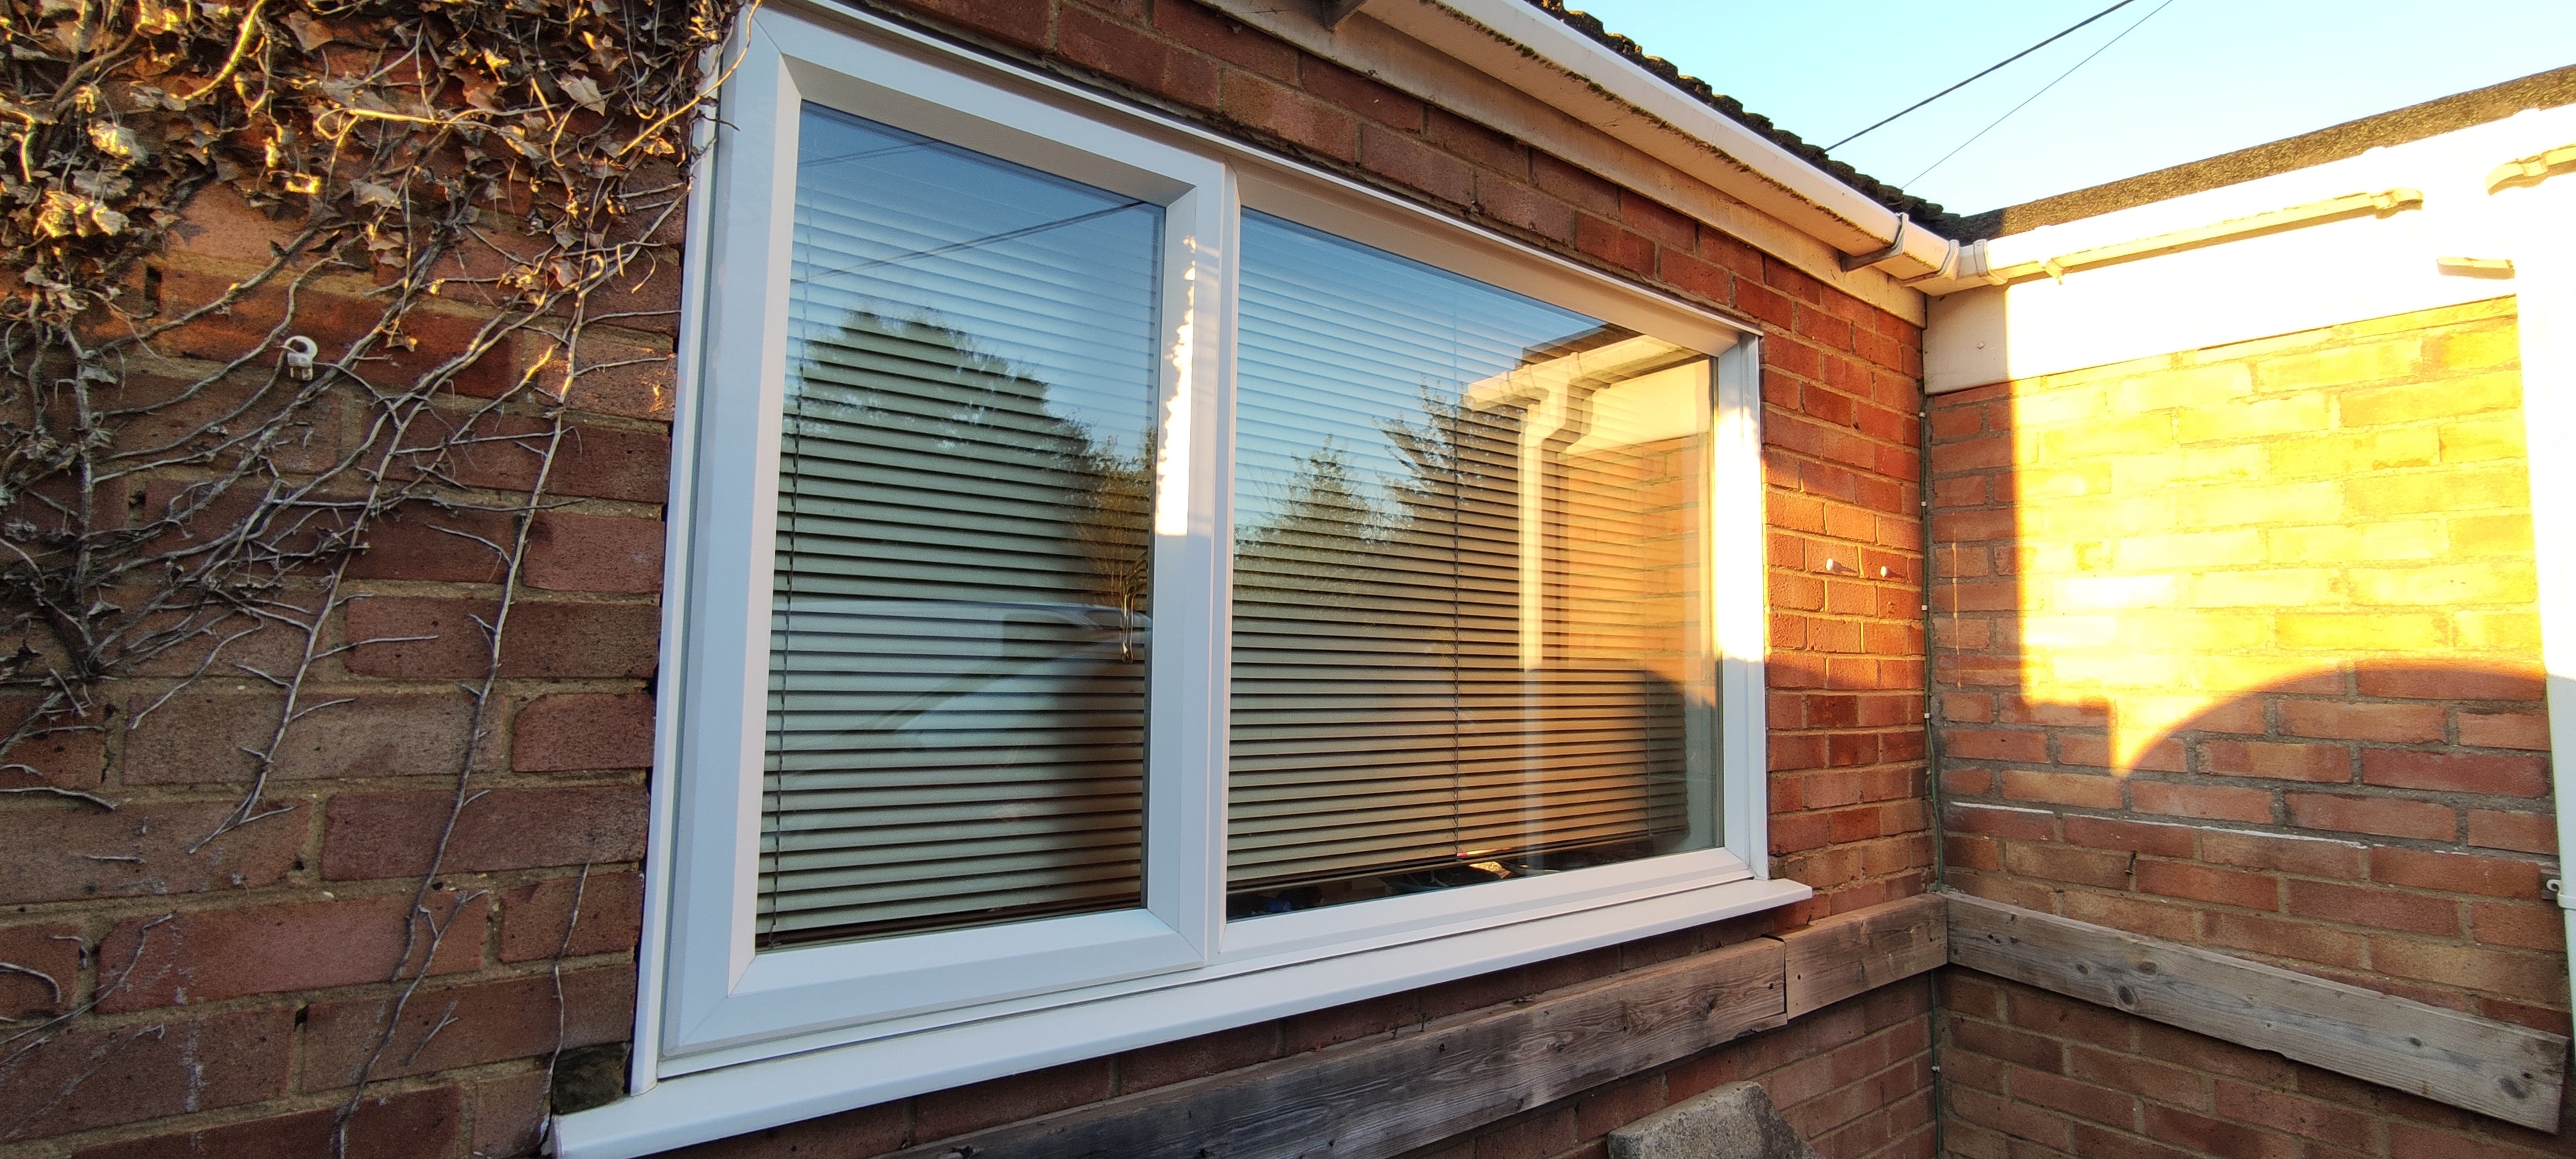 exterior pro window cleaning basildon - spotless, clean, shiny window